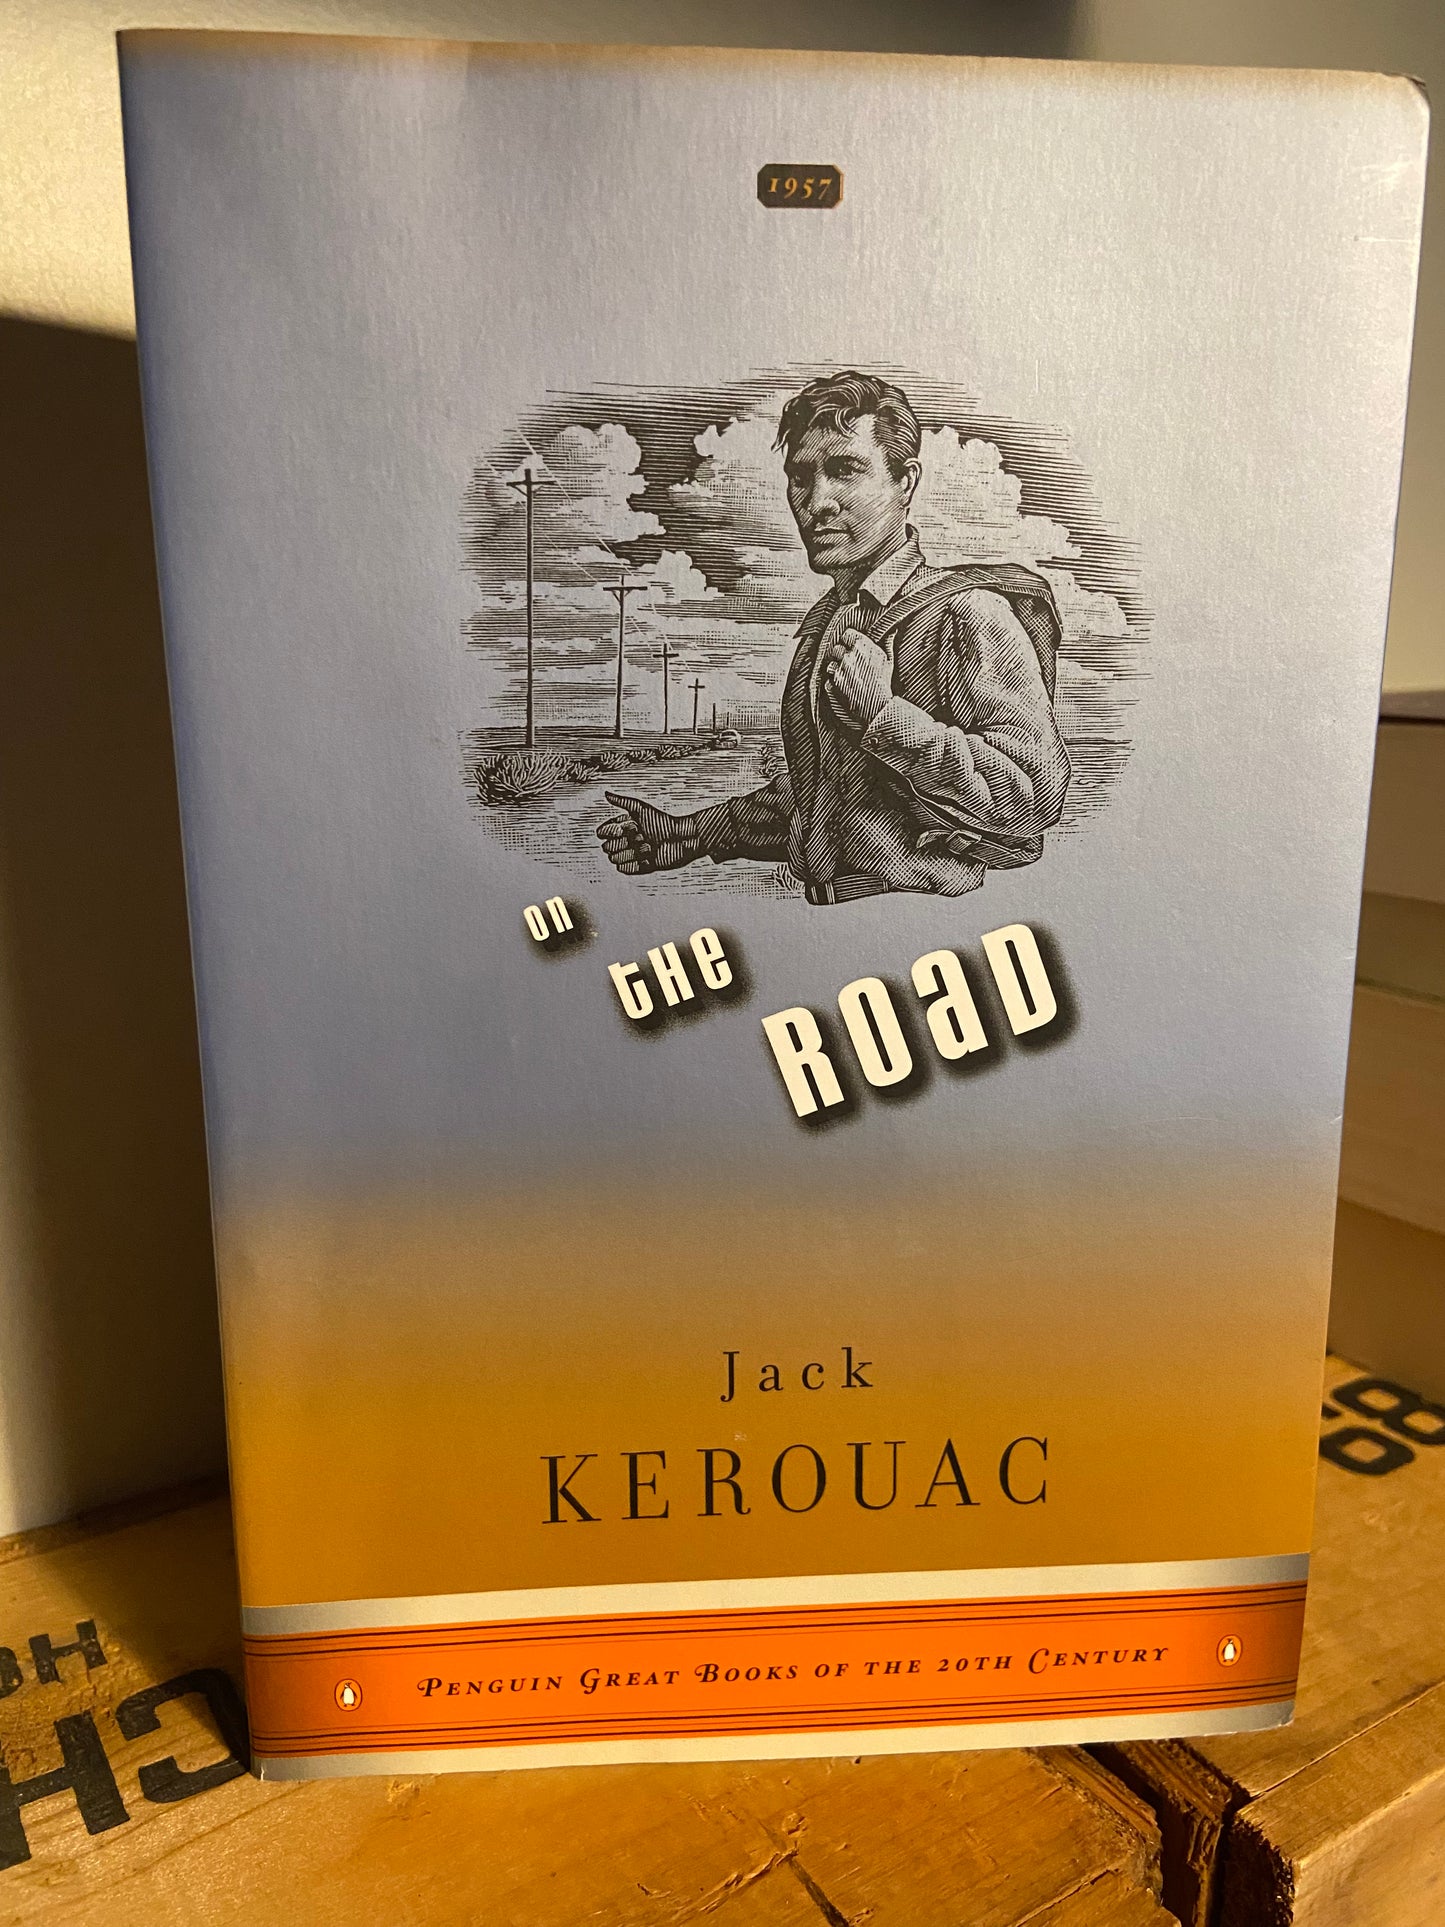 On The Road - Jack Kerouac